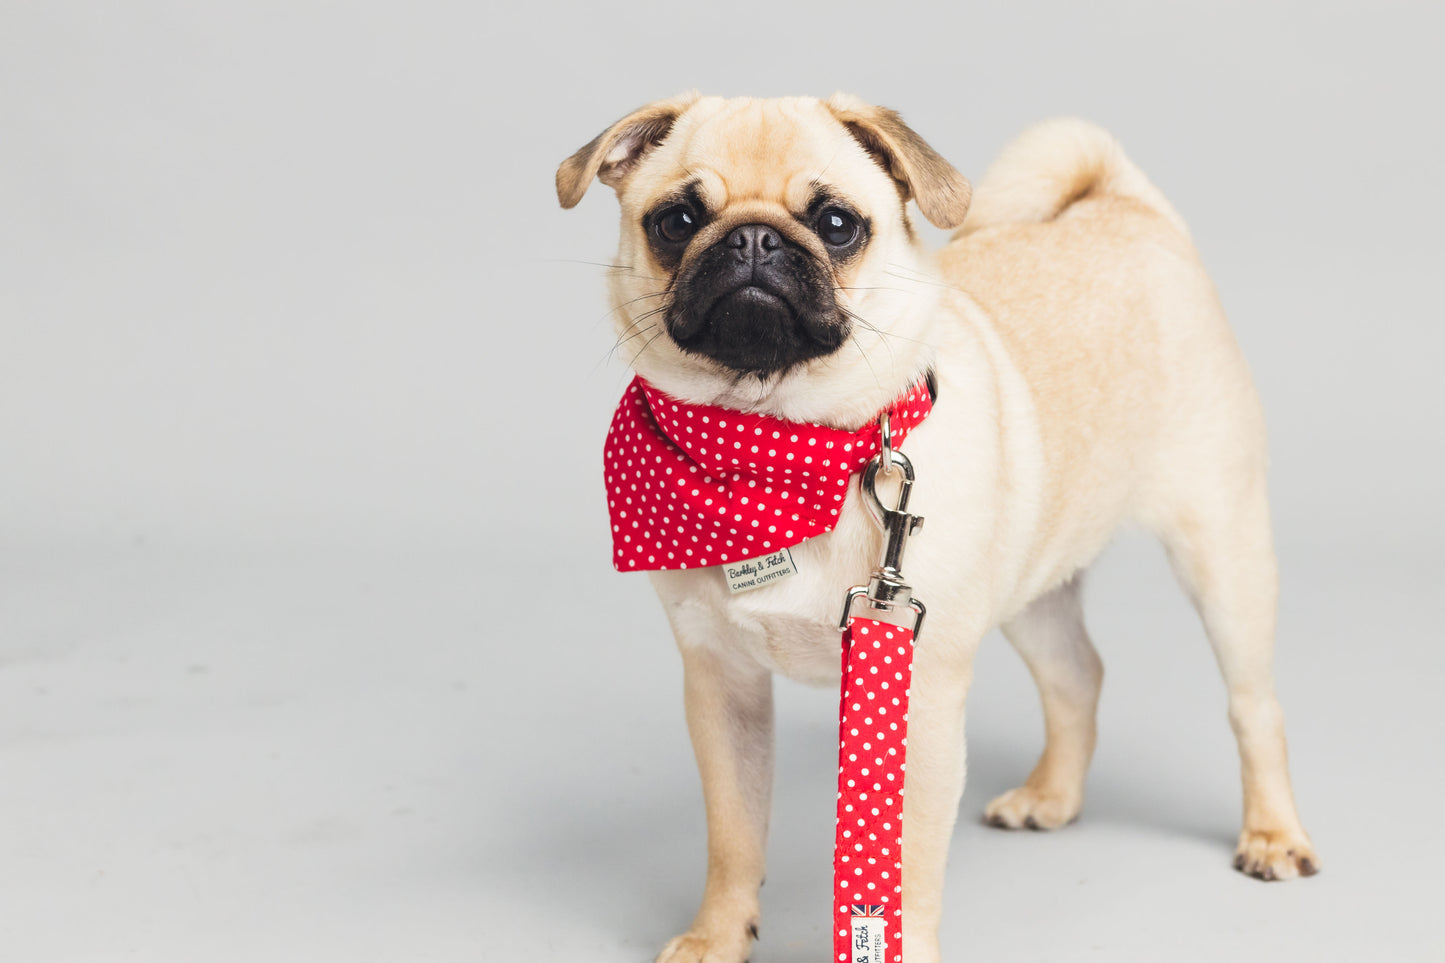 Red Spot Print Dog Collar